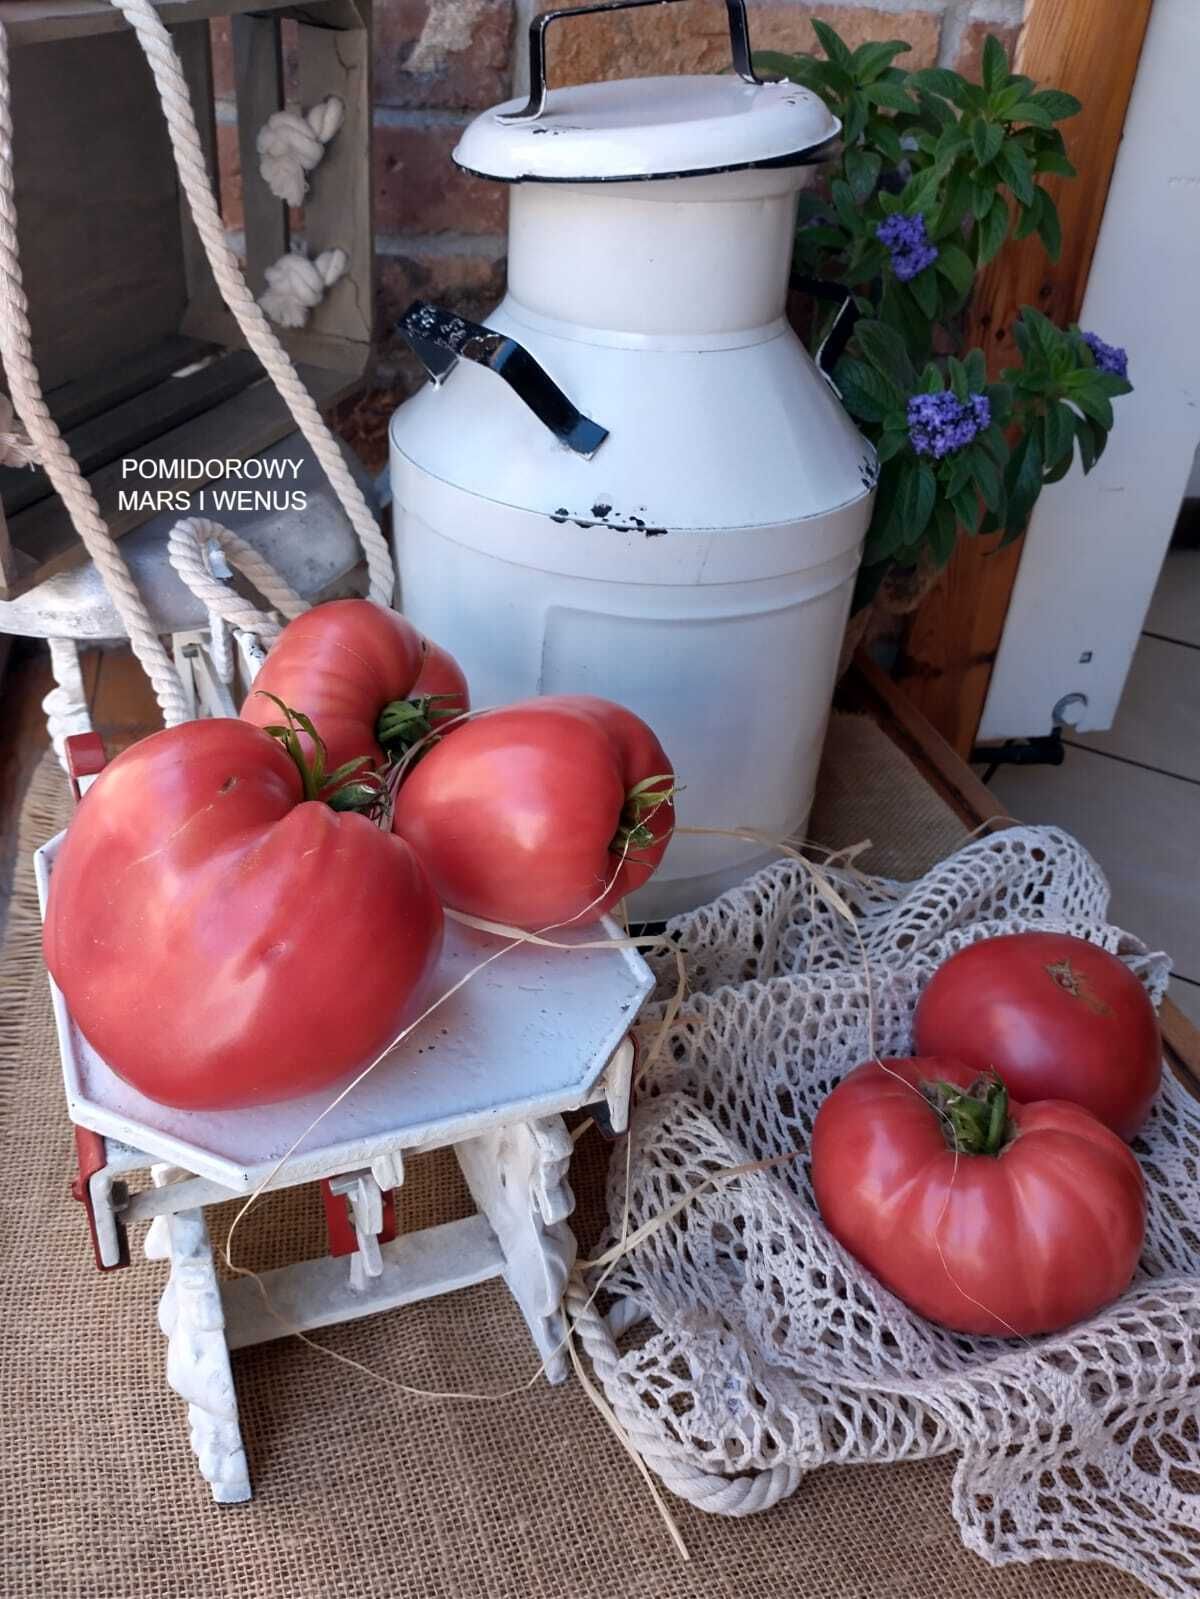 5 Odmian Nasion Pomidora Z Moich Ogłoszeń